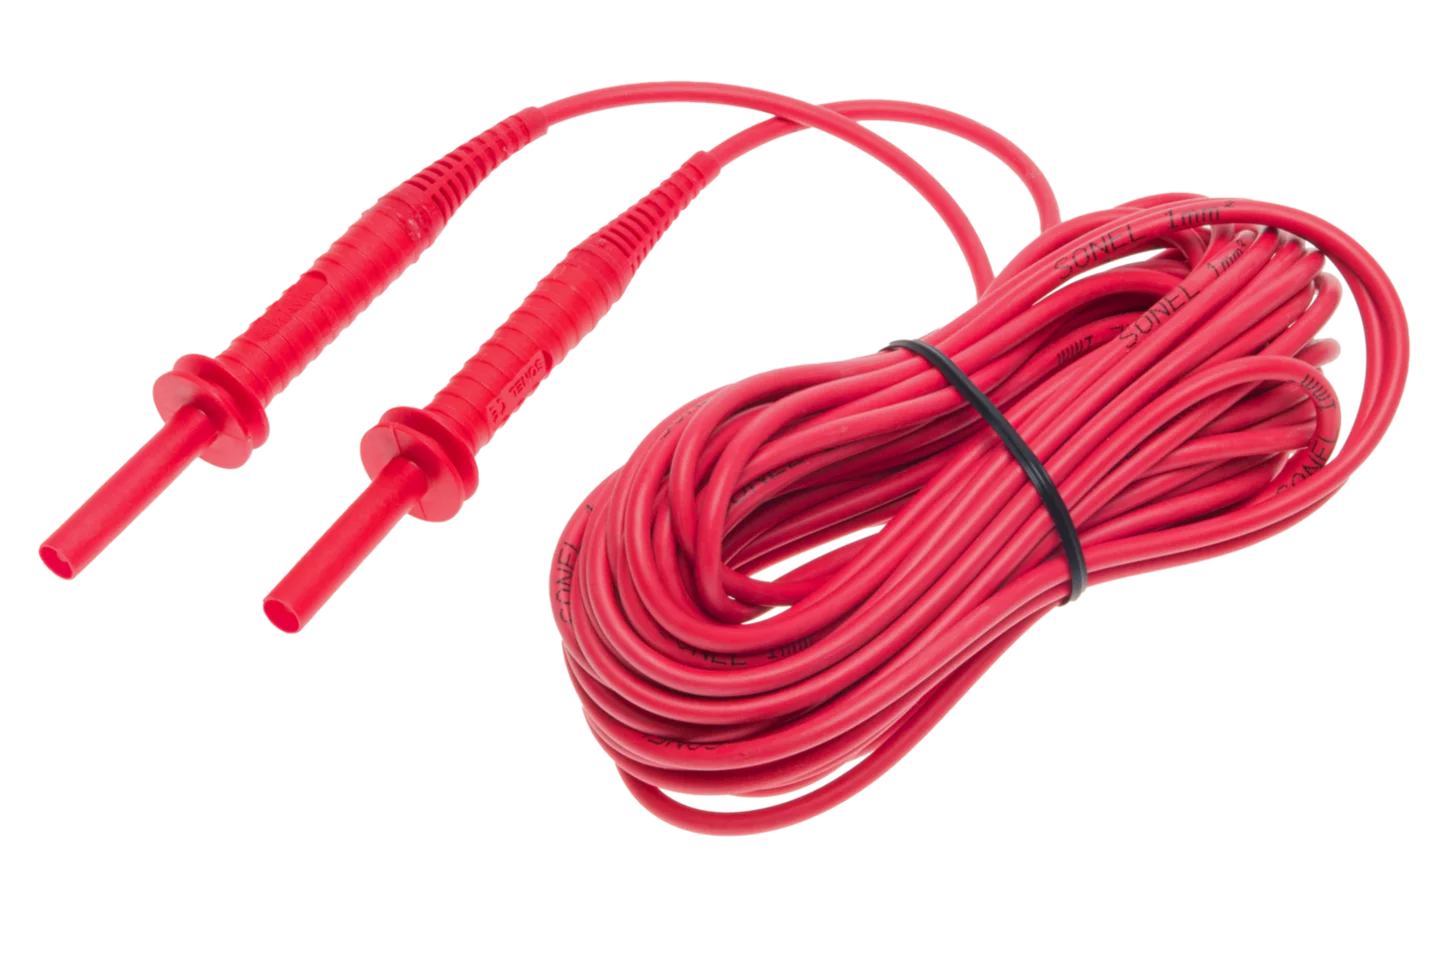 Test lead 10 m 5 kV (banana plugs) red